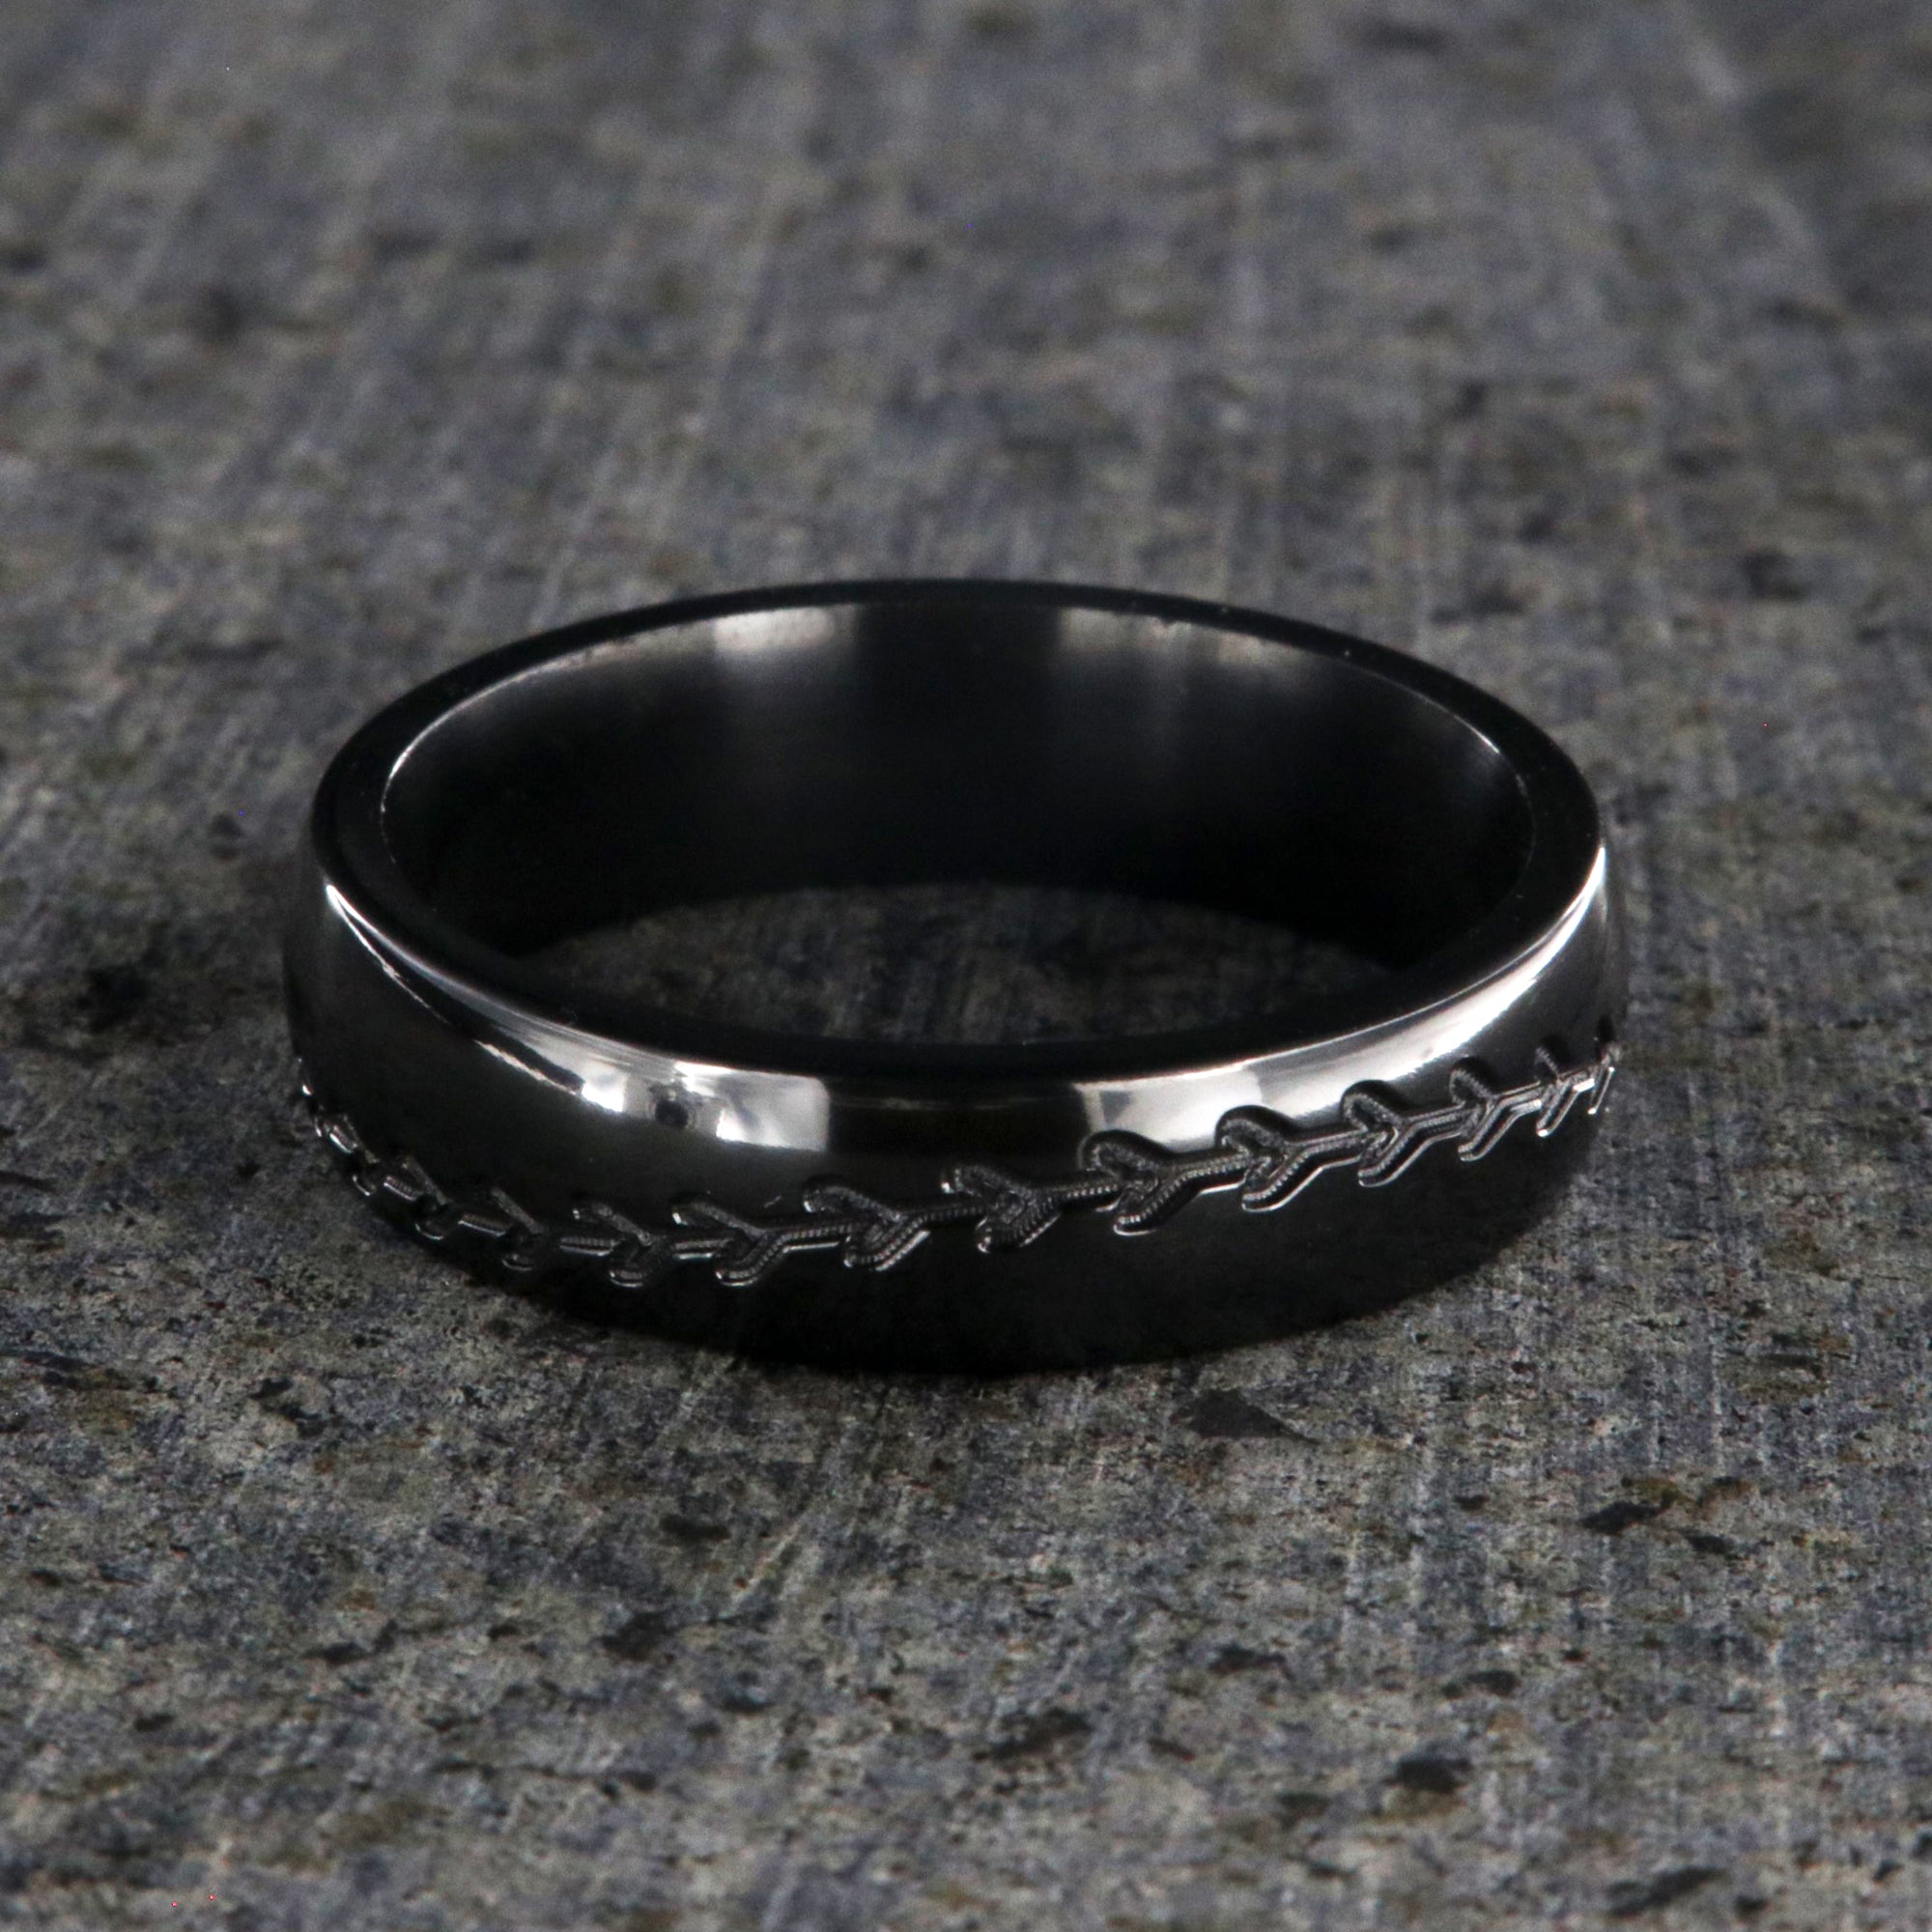 6mm wide black zirconium baseball ring with milled baseball stitching